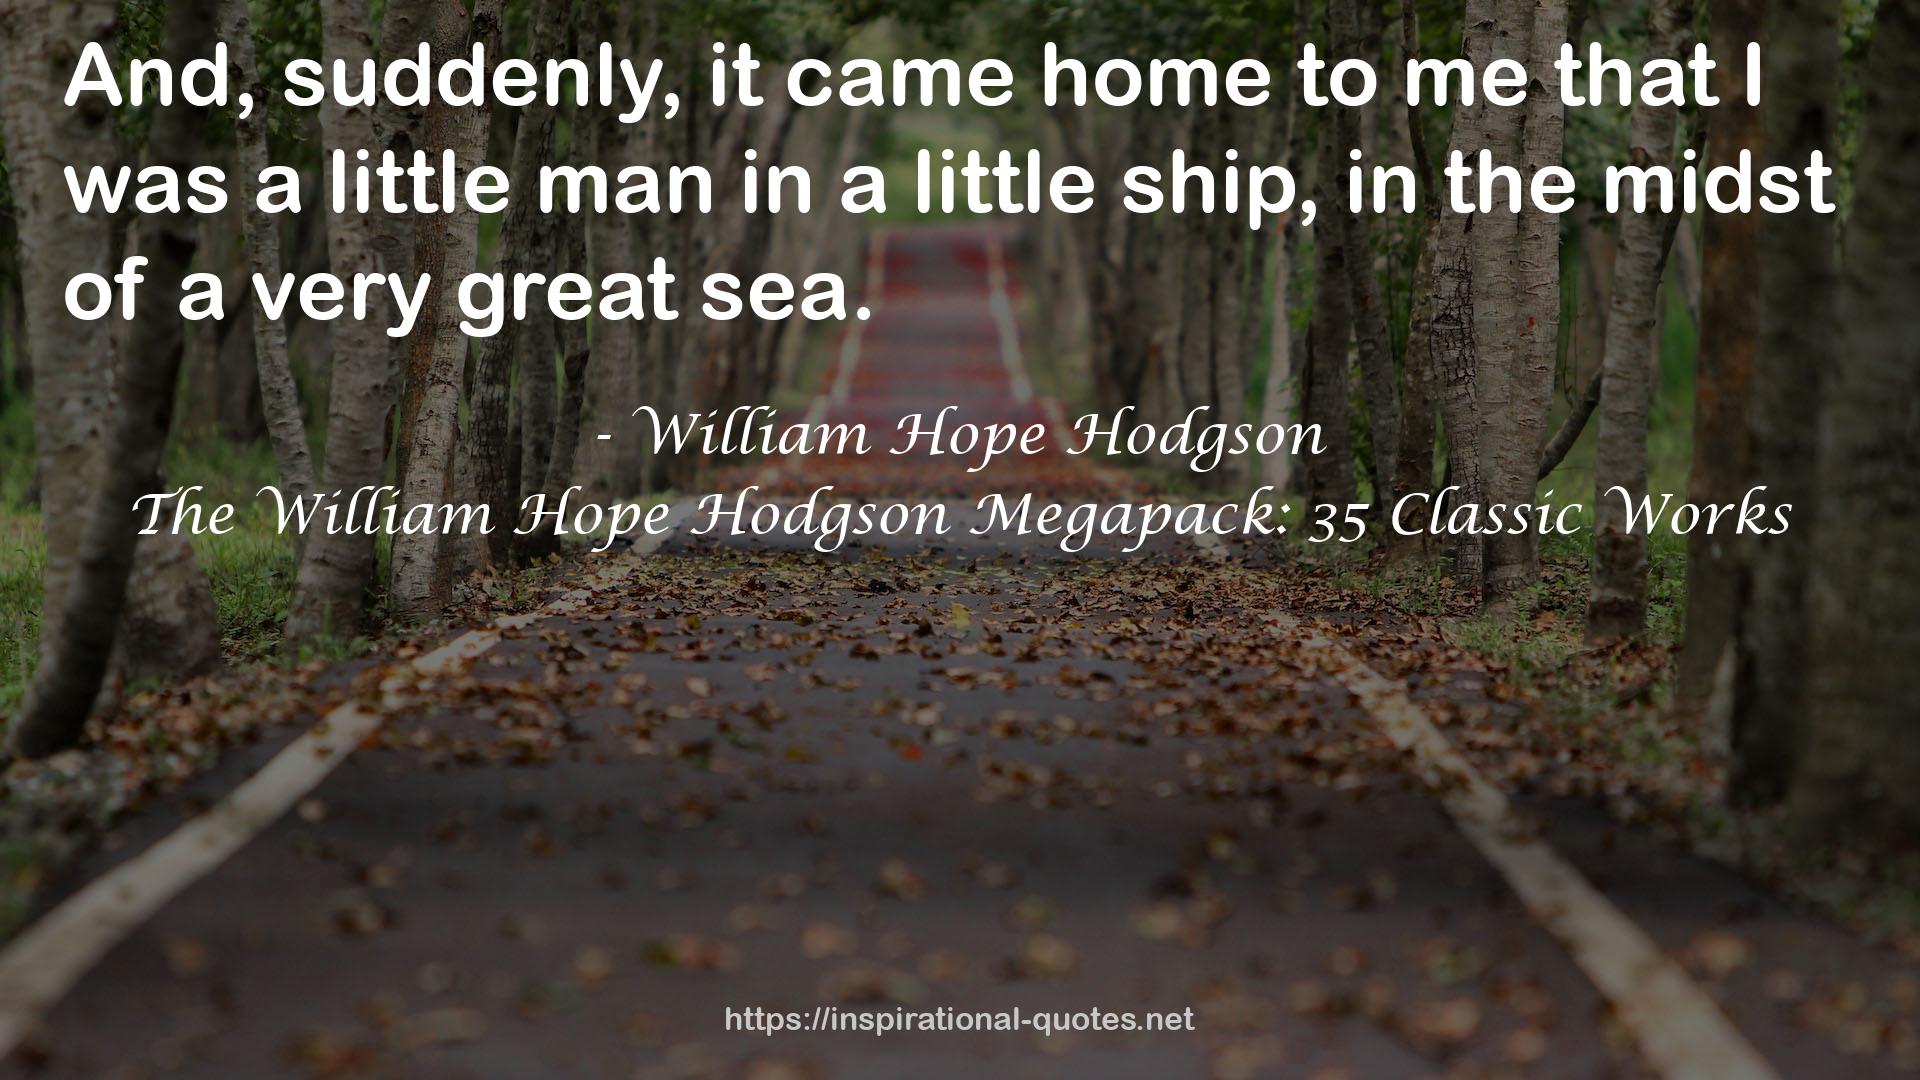 The William Hope Hodgson Megapack: 35 Classic Works QUOTES